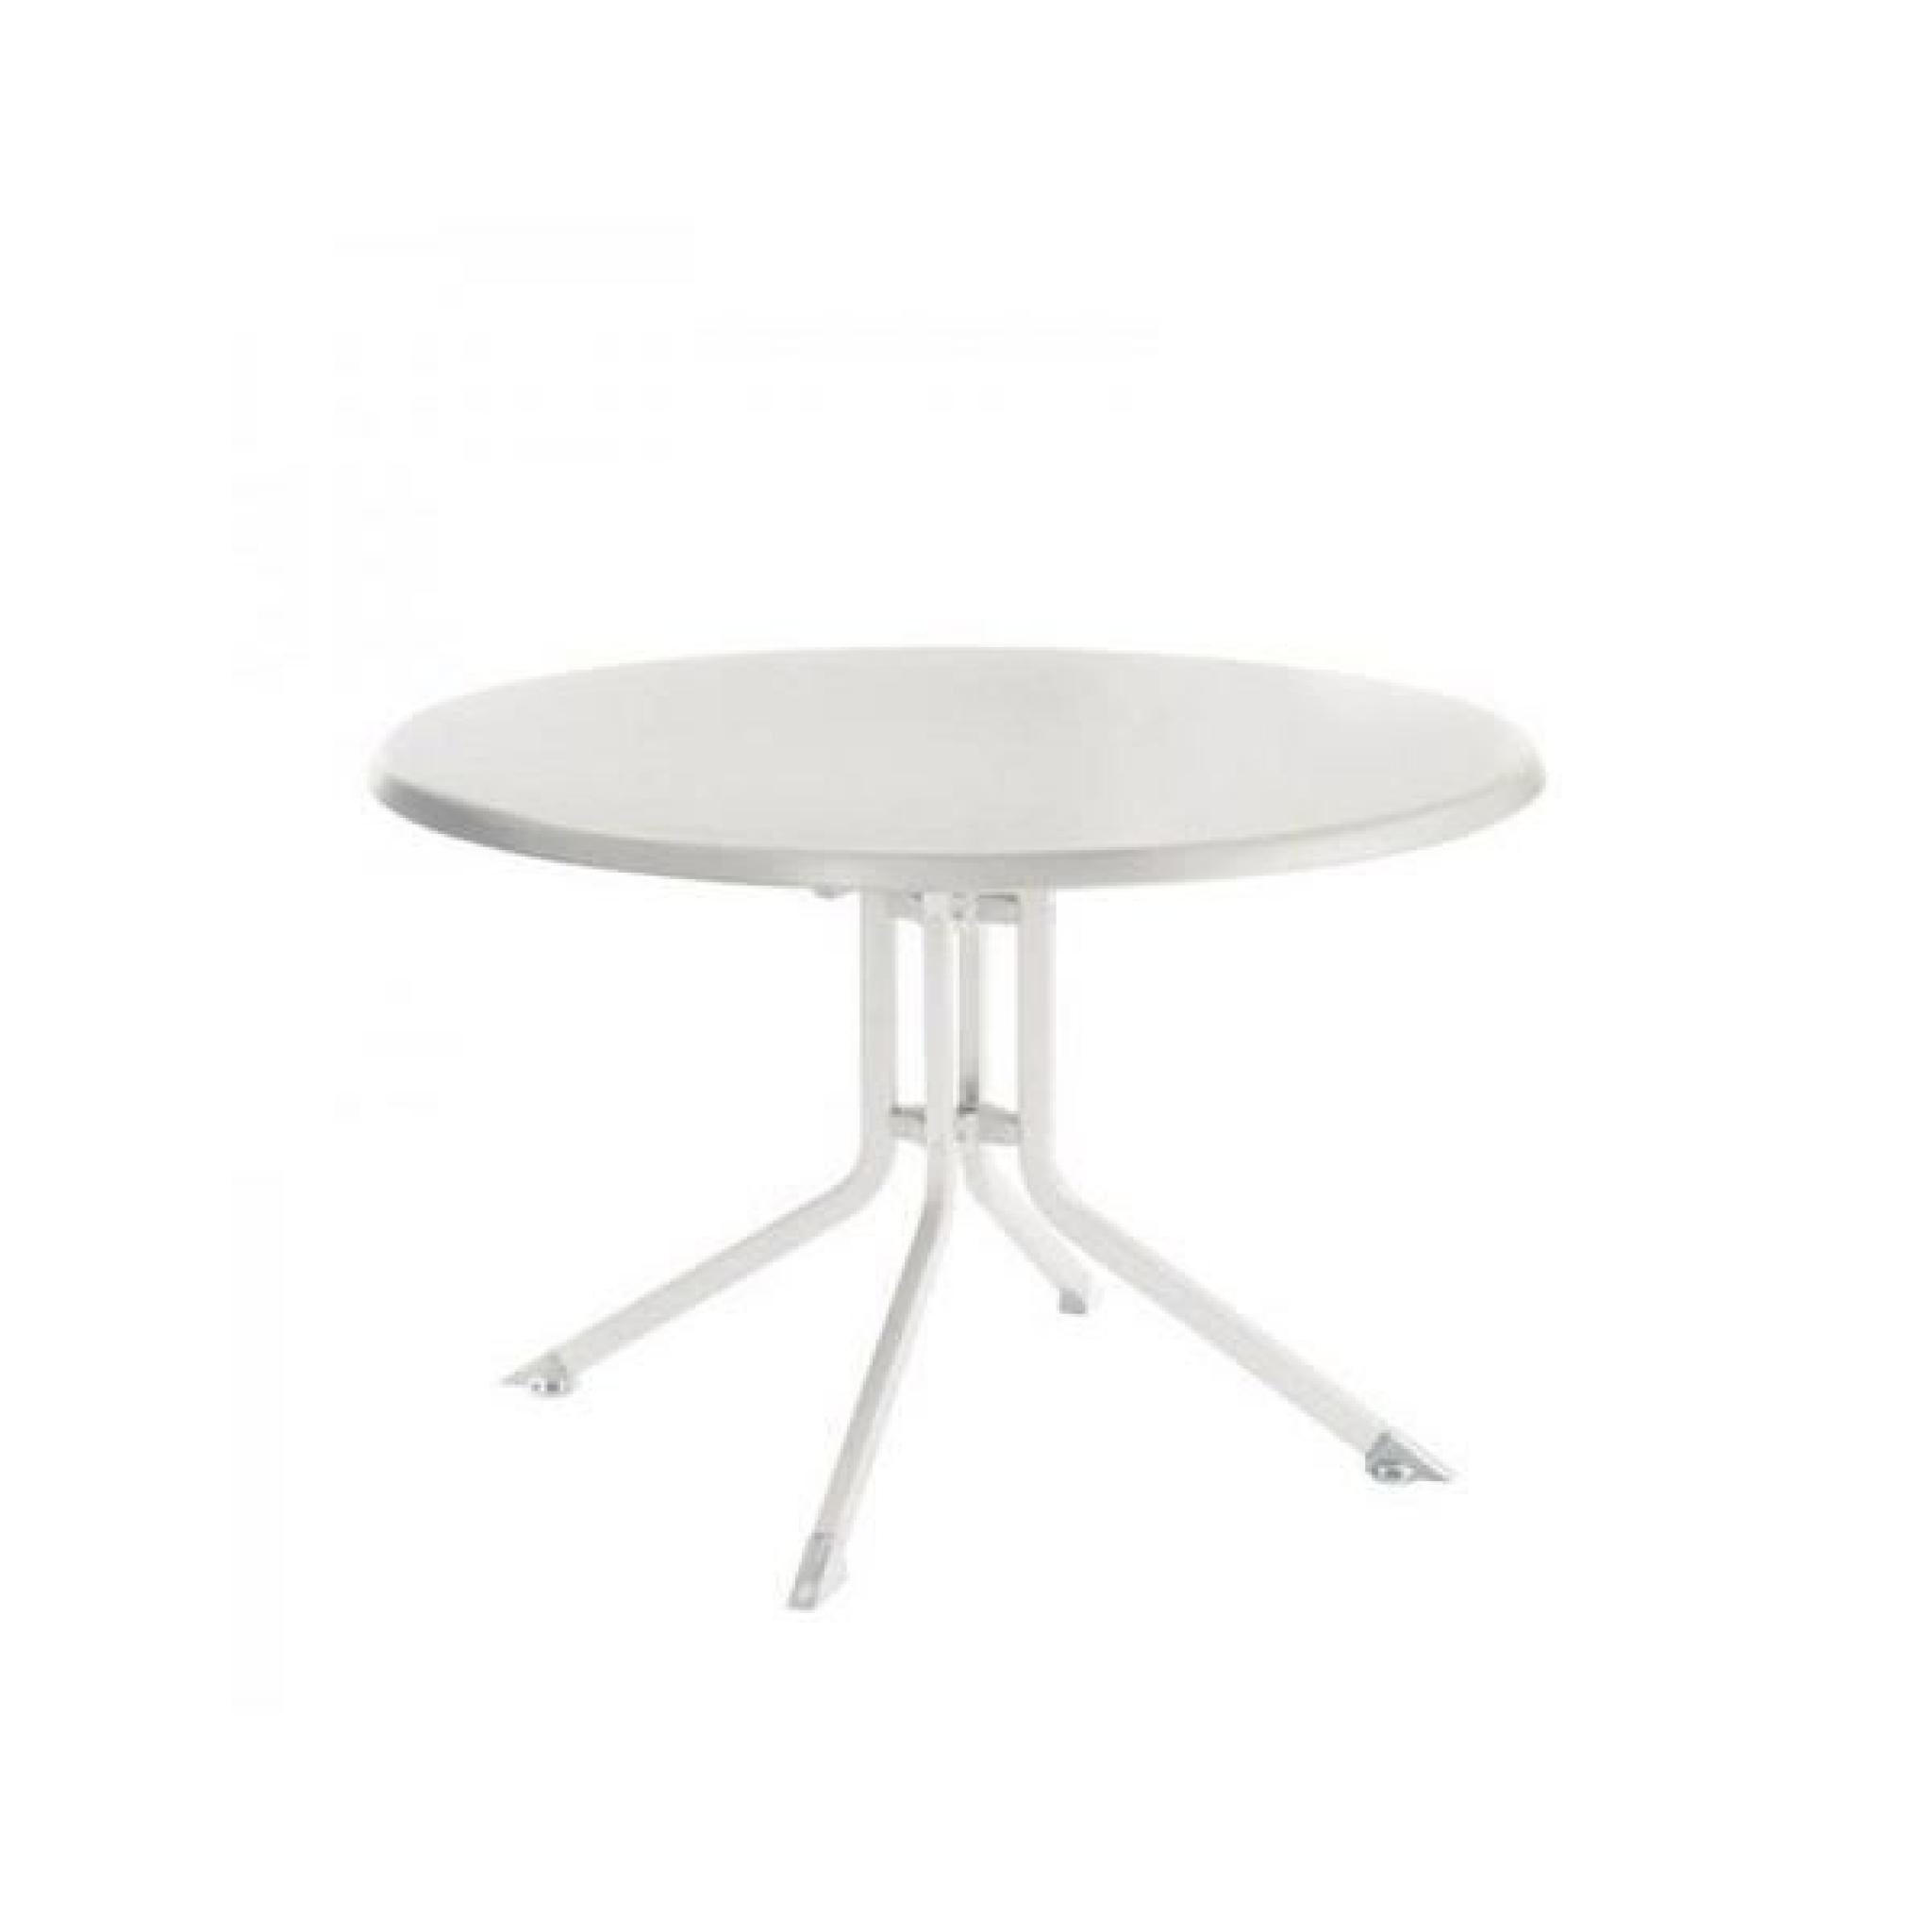 Table de jardin pliante blanche ADVANTAGE en aluminium - Ø 100 x H 74 cm